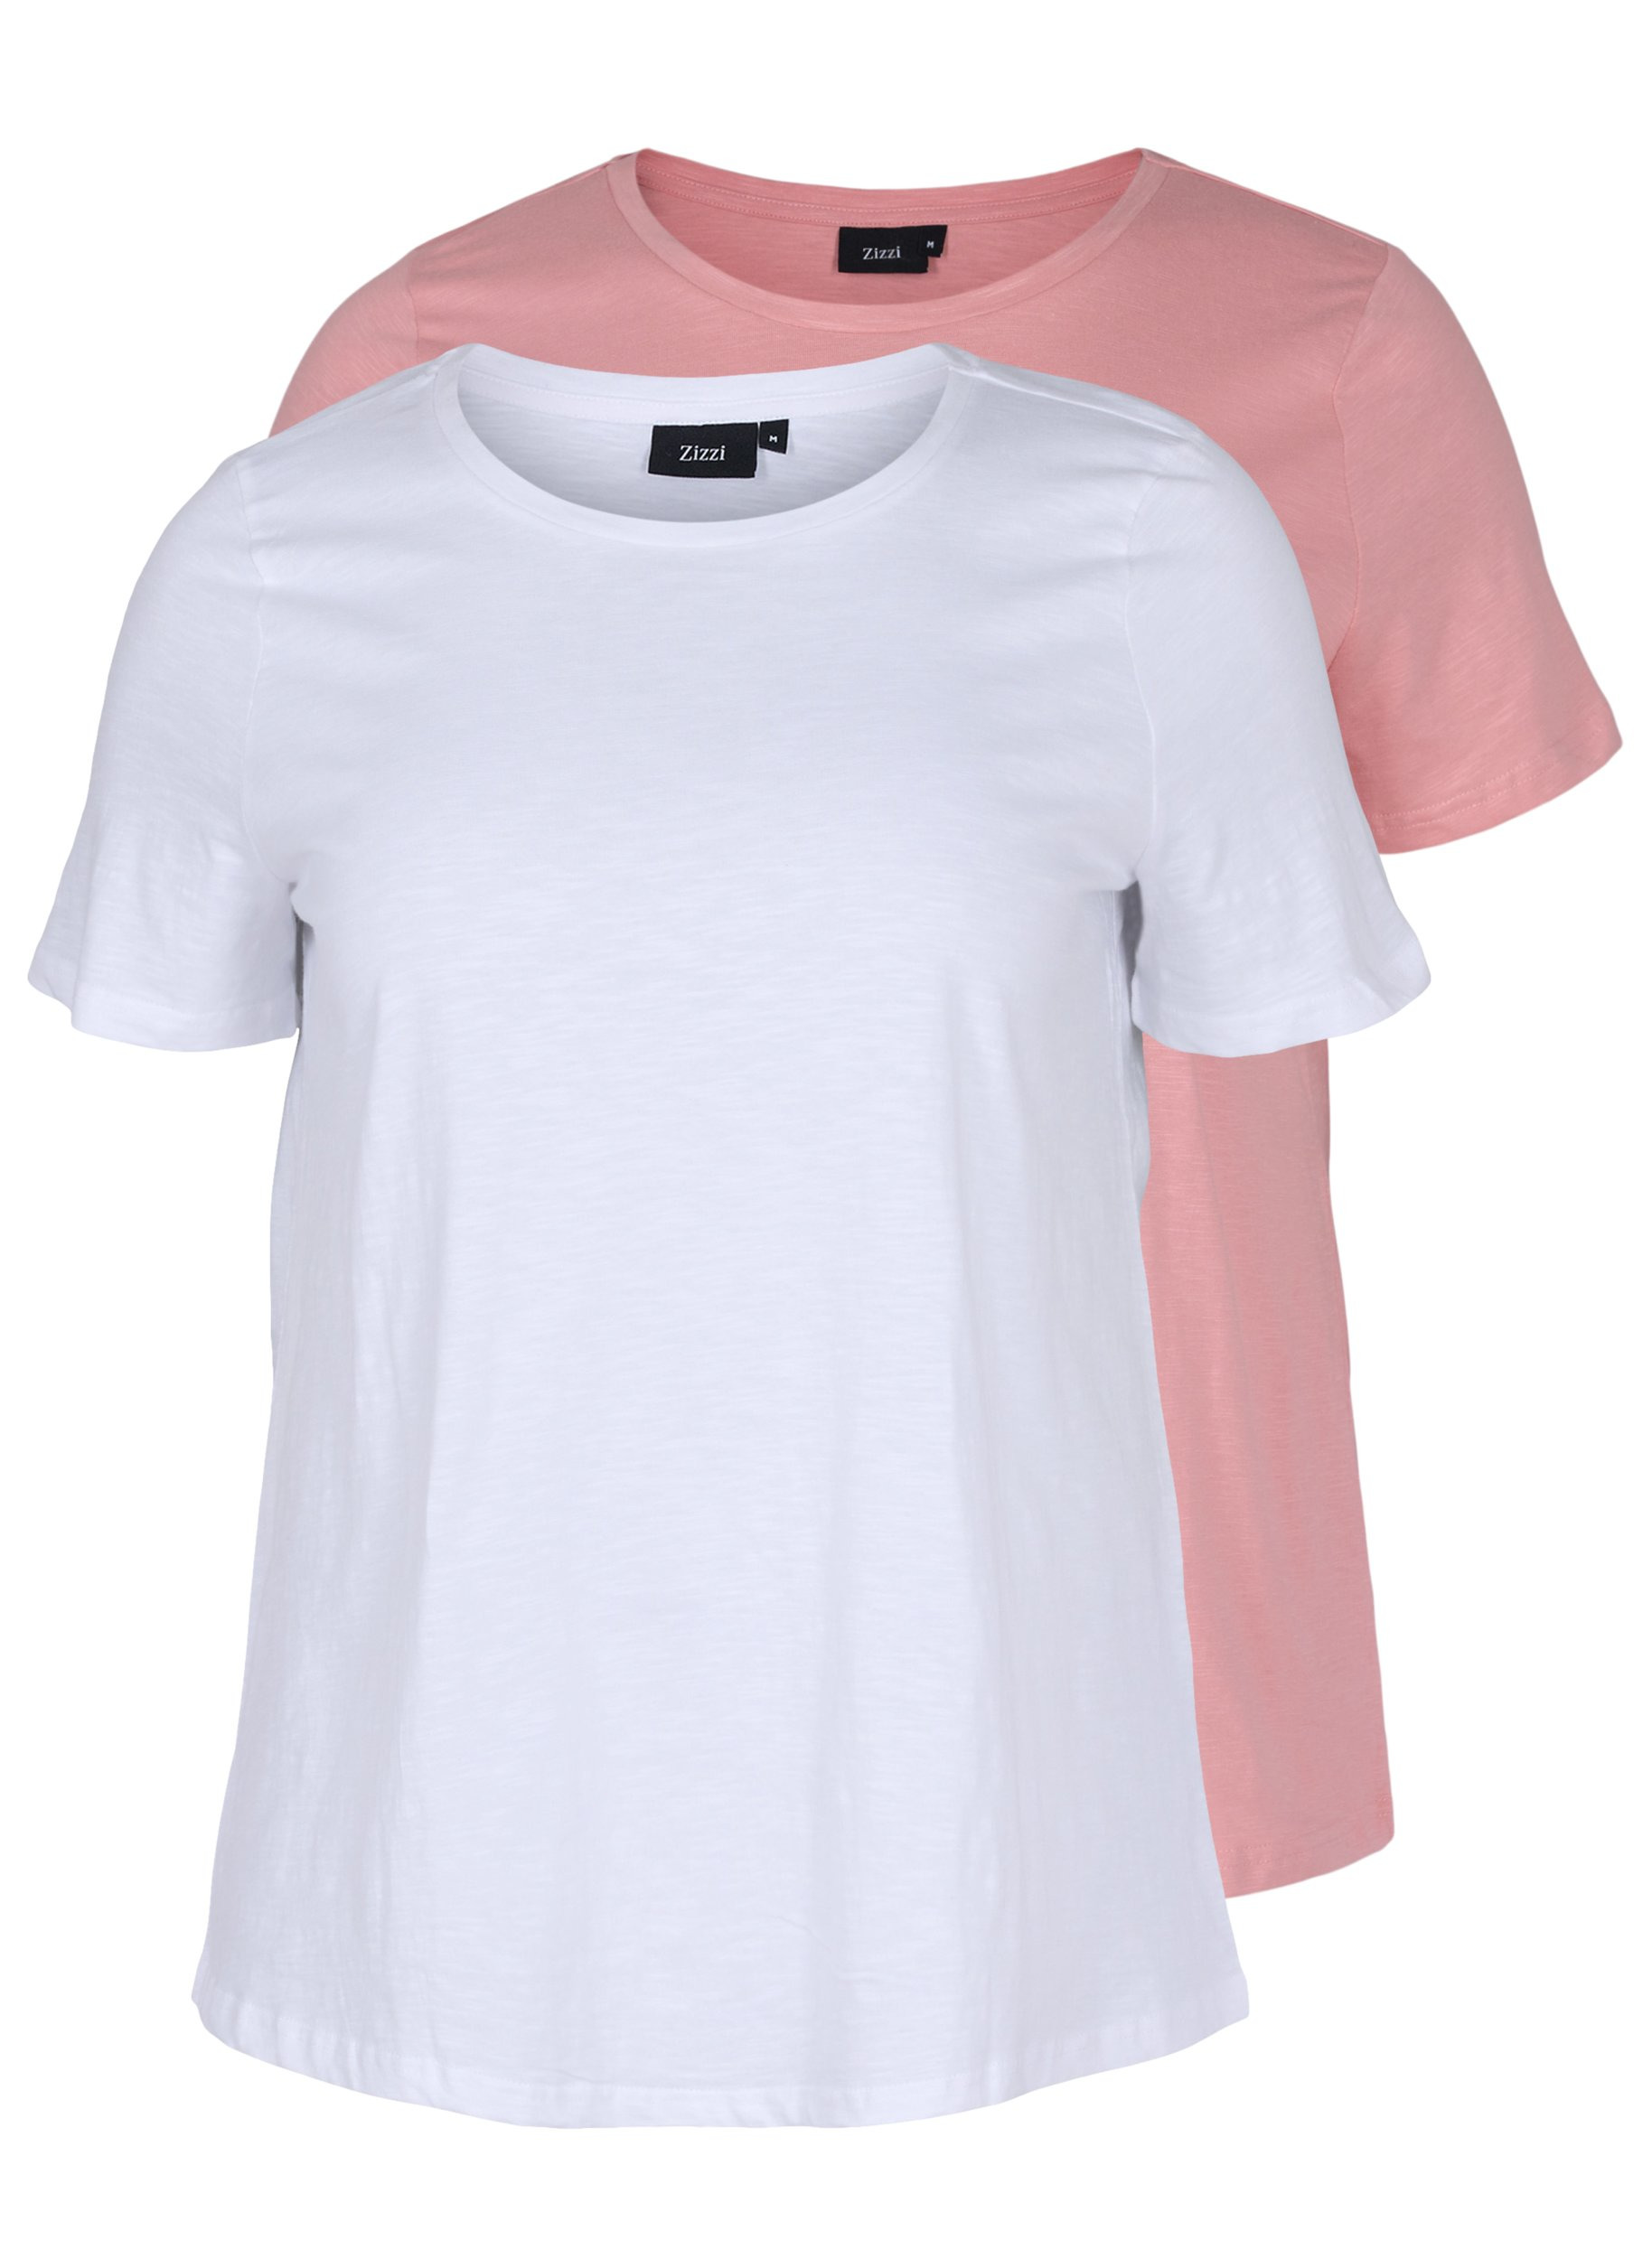 2er Pack kurzarm T-Shirts aus Baumwolle, Bright White/Blush